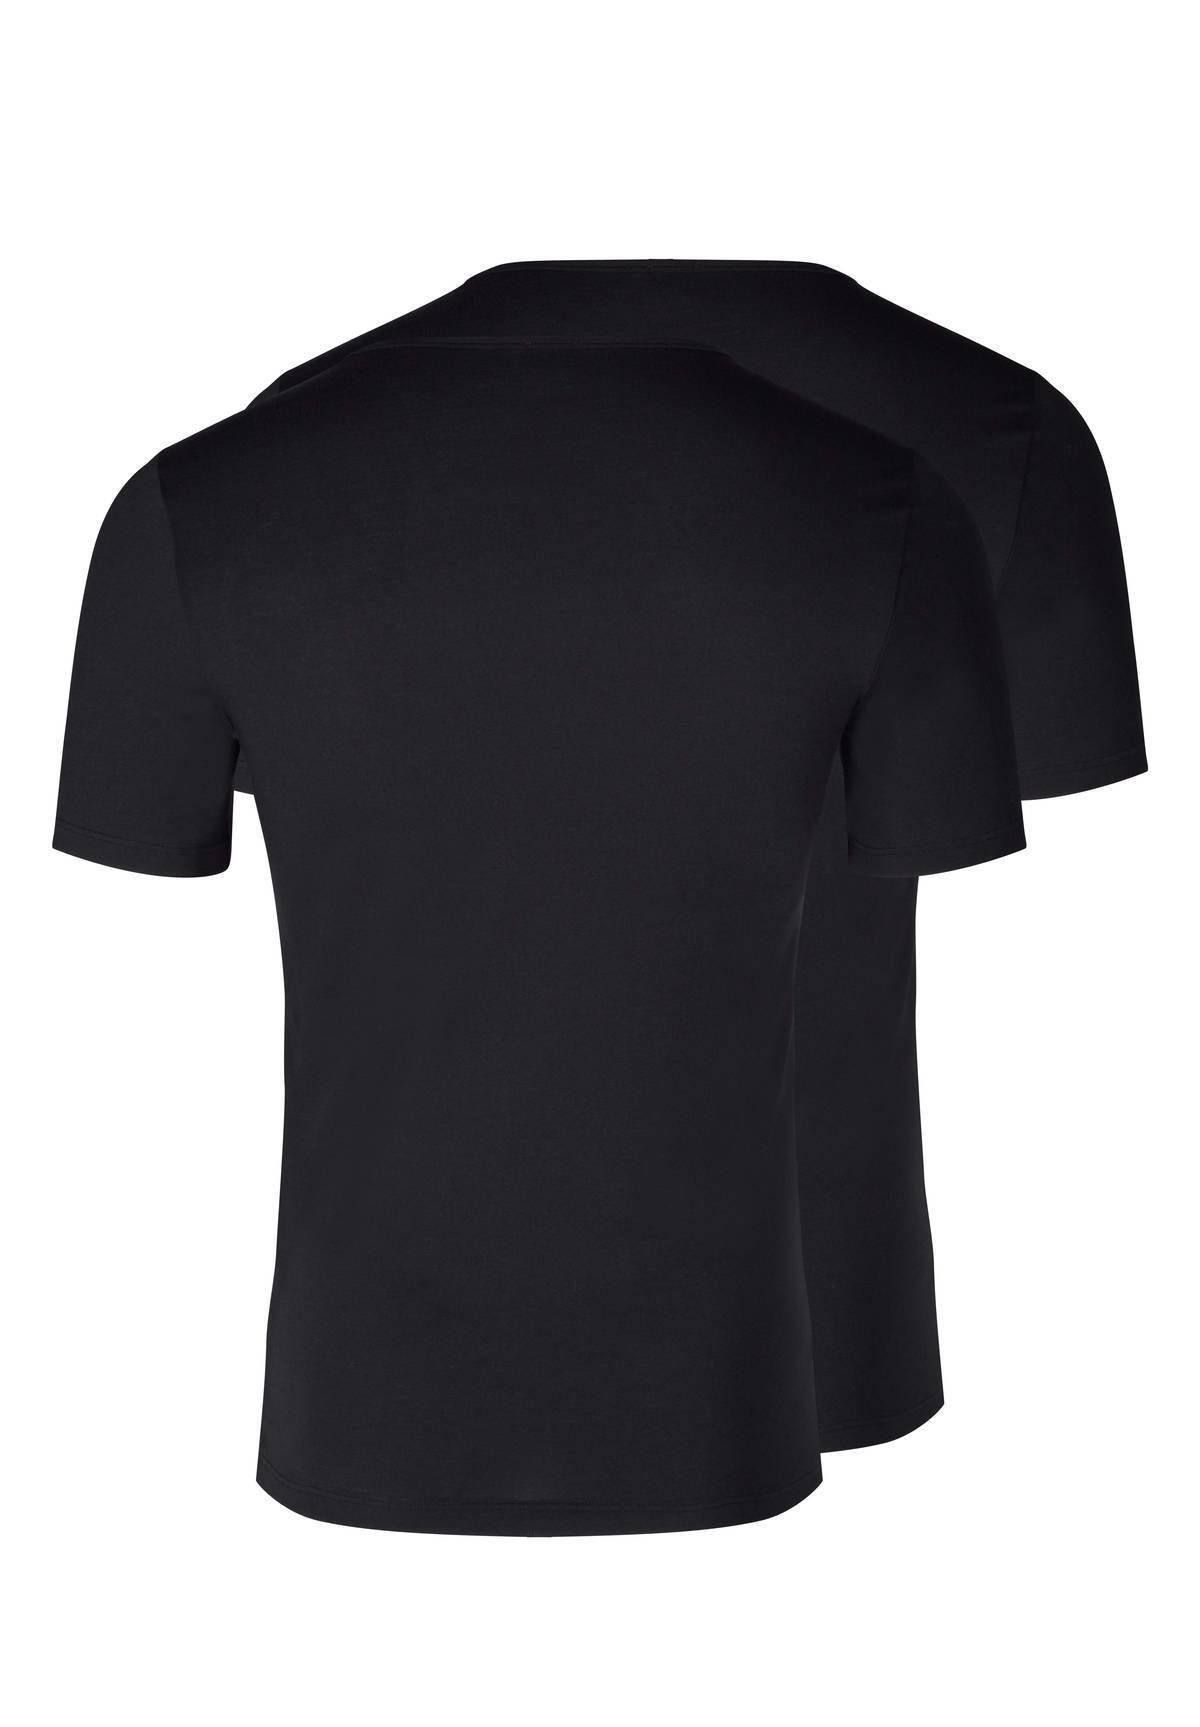 Halbarm - Unterhemd, T-Shirt, Skiny Schwarz Herren Unterhemd Pack 2er